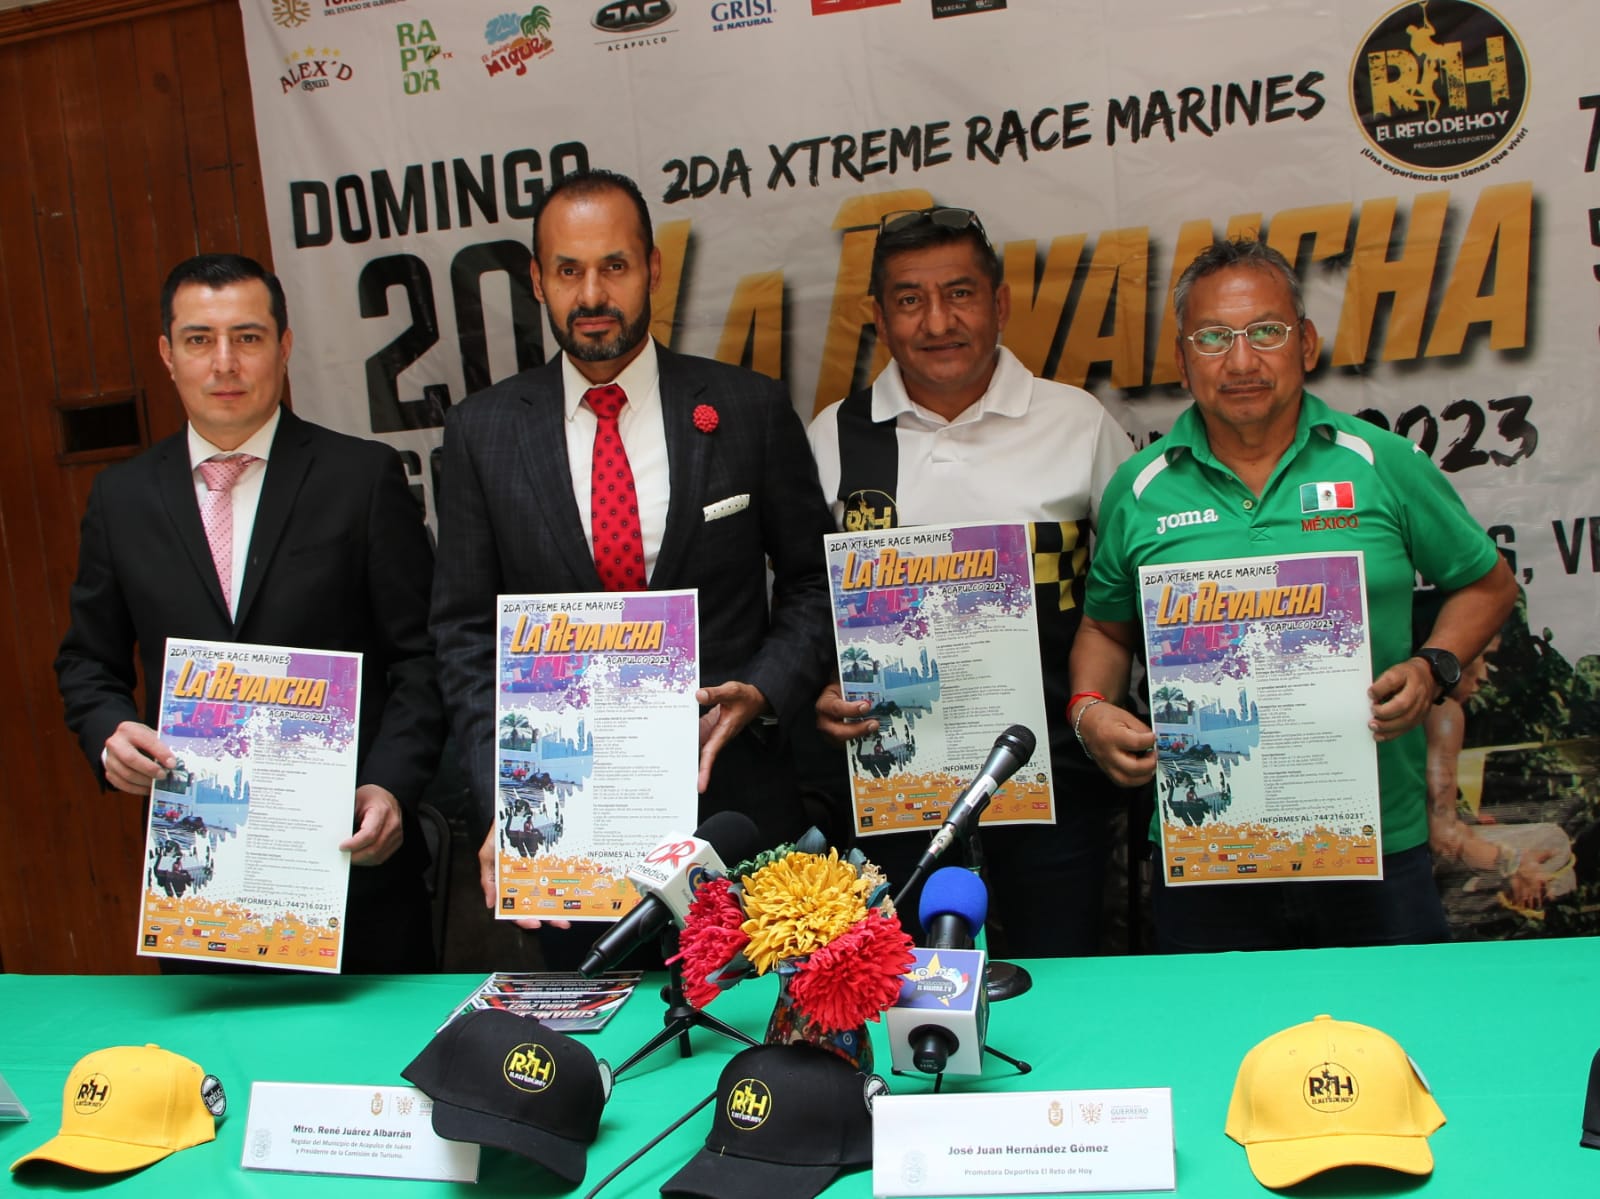 Lista la 2da carrera Xtreme Race Marines, “La Revancha” en Acapulco”